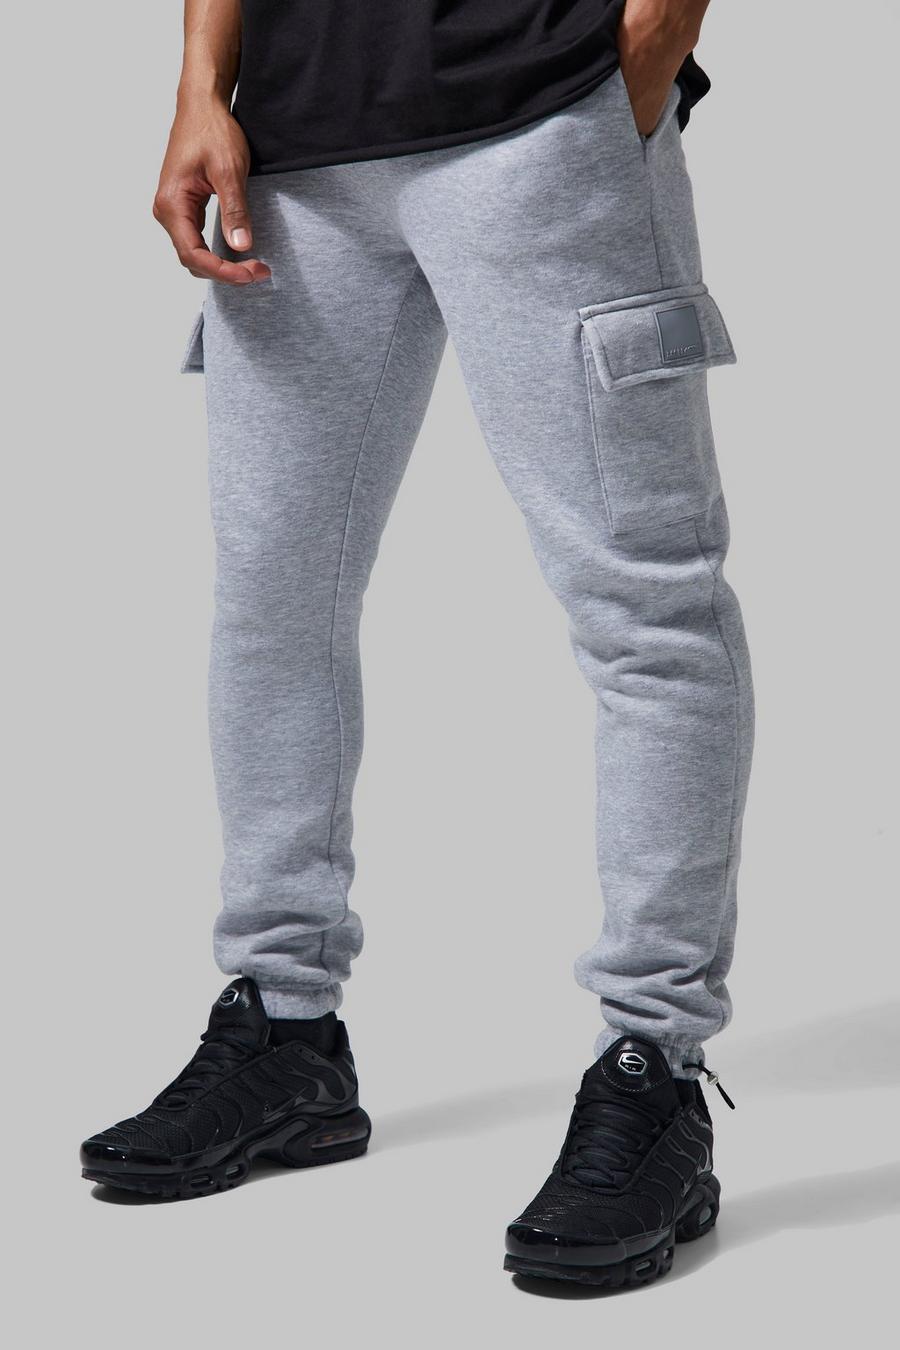 Pantaloni tuta Cargo Man Active Gym con polsini alle caviglie e fermacorde, Grey marl gris